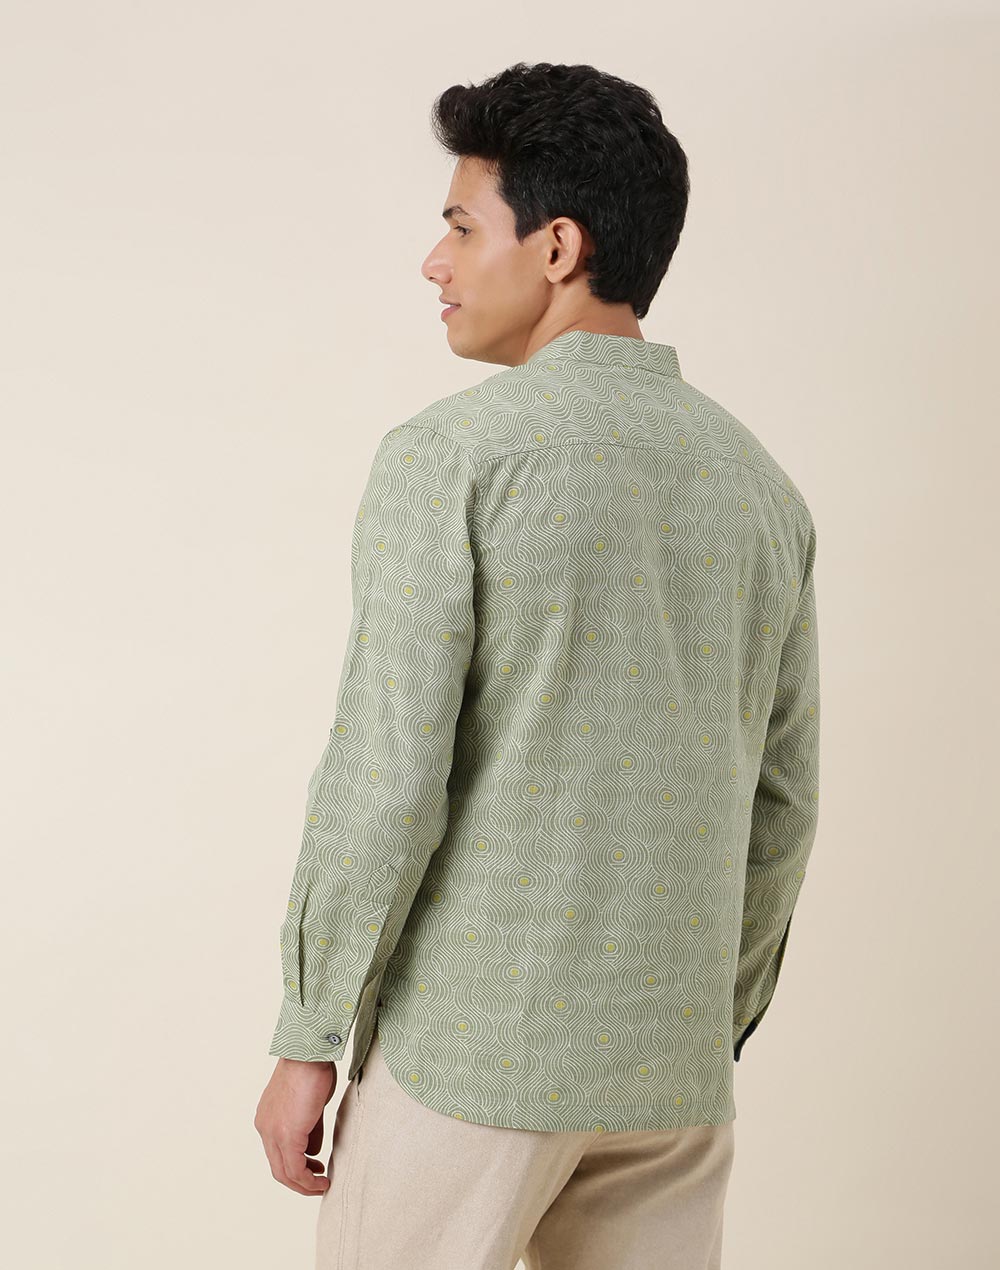 Green Cotton Printed Slim Fit Mid Placket Shirt